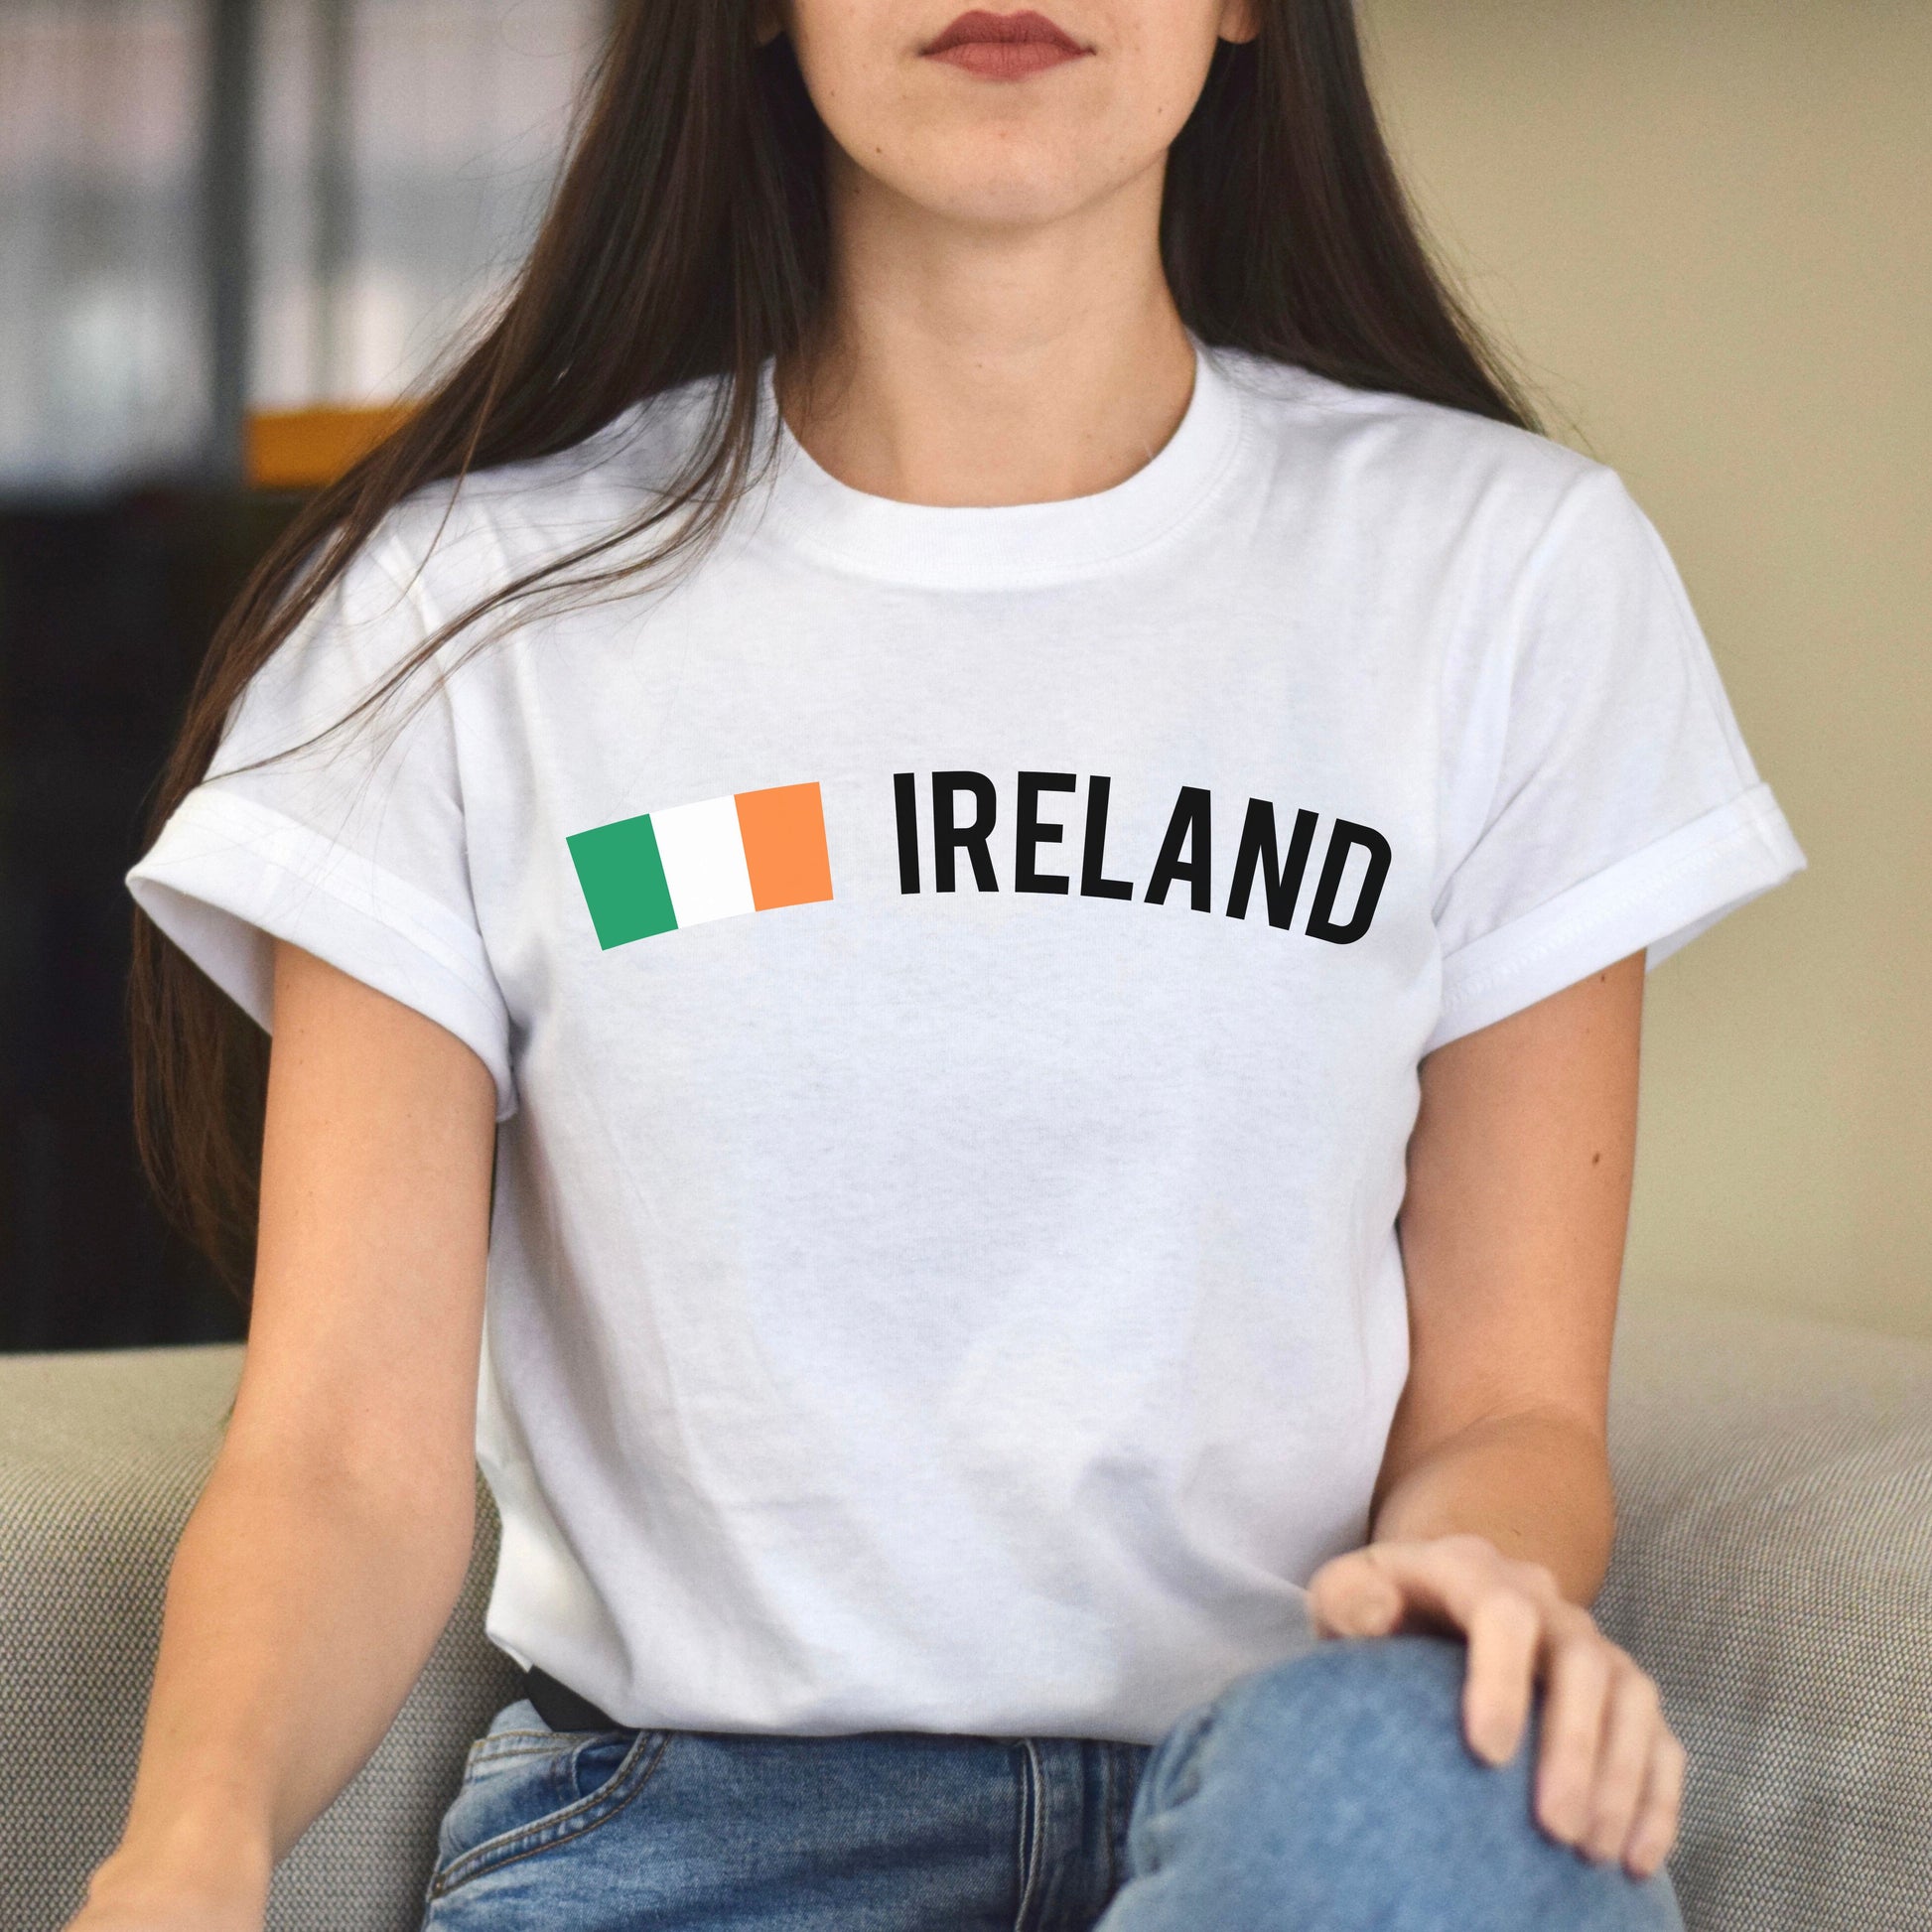 Ireland Unisex T-shirt gift Irish flag tee Dublin White Black Dark Heather-White-Family-Gift-Planet